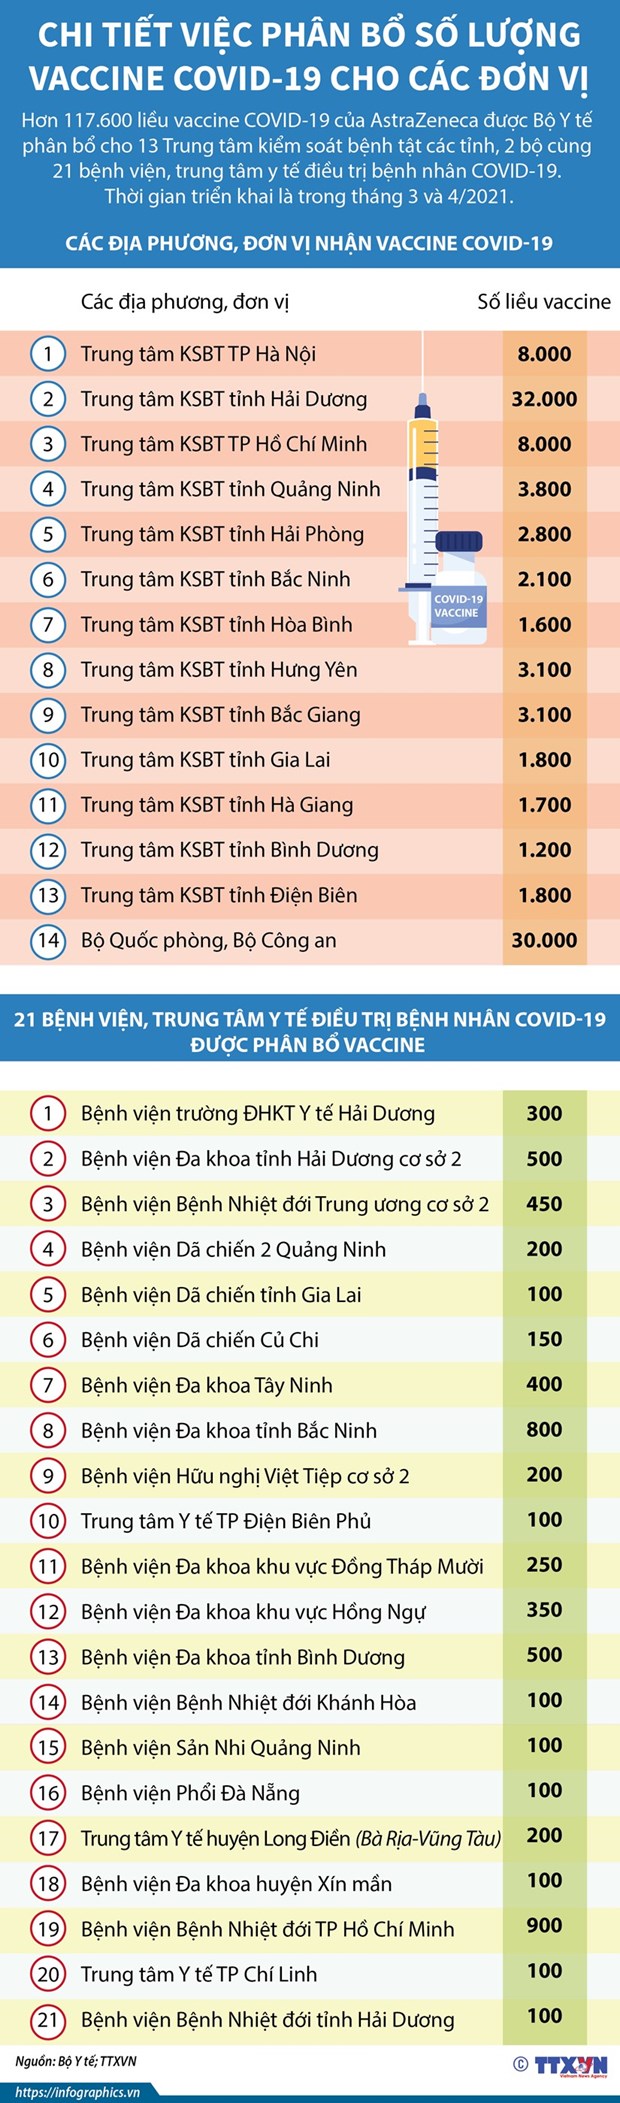 Hom nay, Viet Nam bat dau tiem vacxin phong COVID-19 tai nhieu noi hinh anh 2